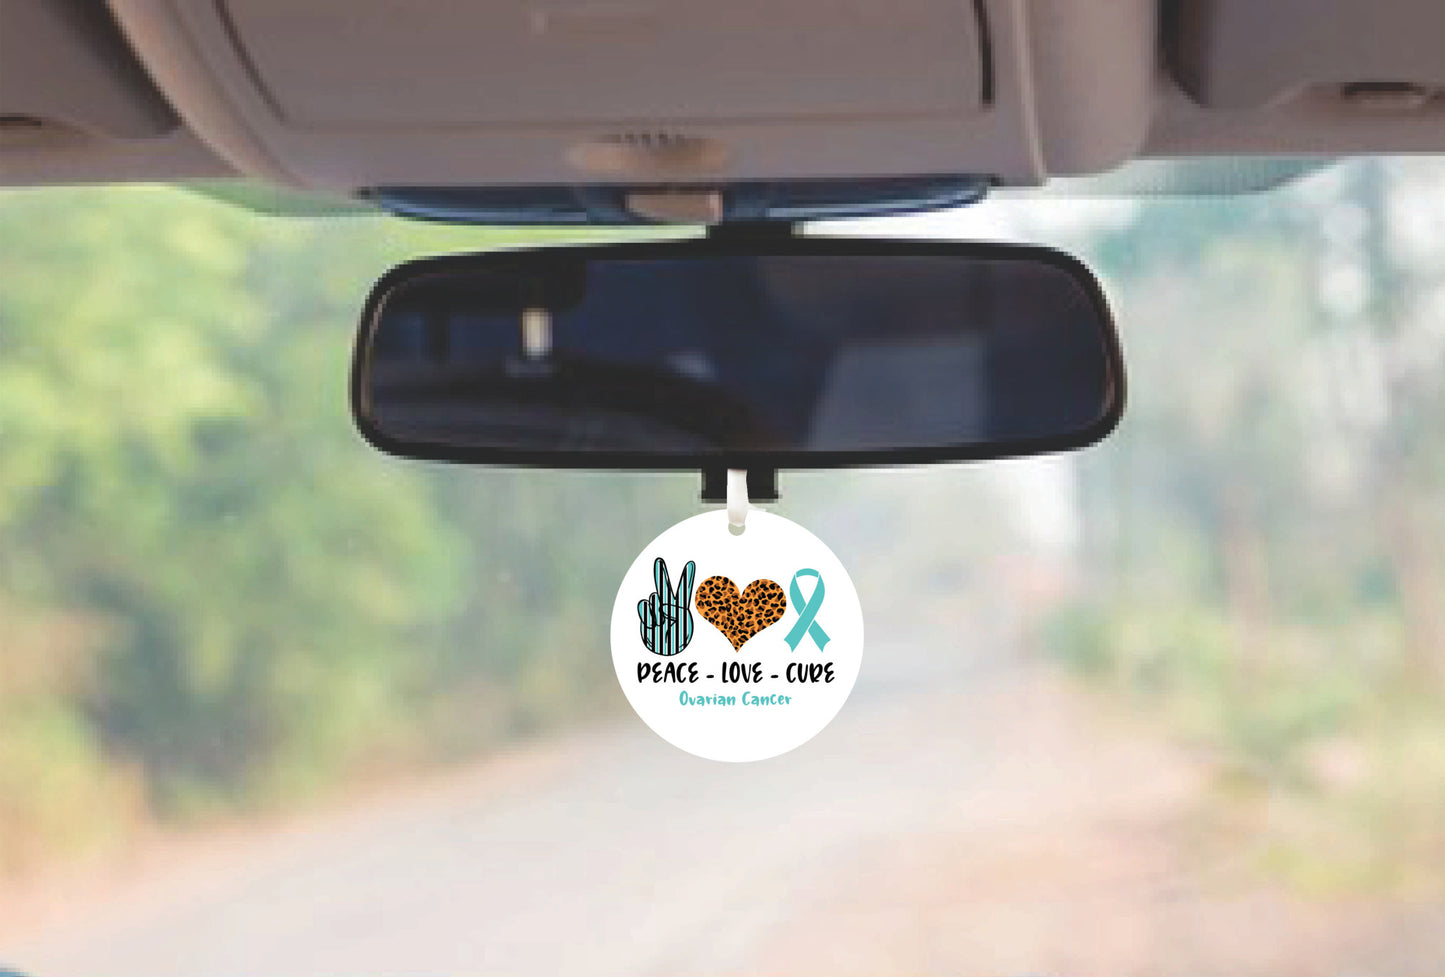 Ovarian Cancer Awareness Car Charm Accessory Gift